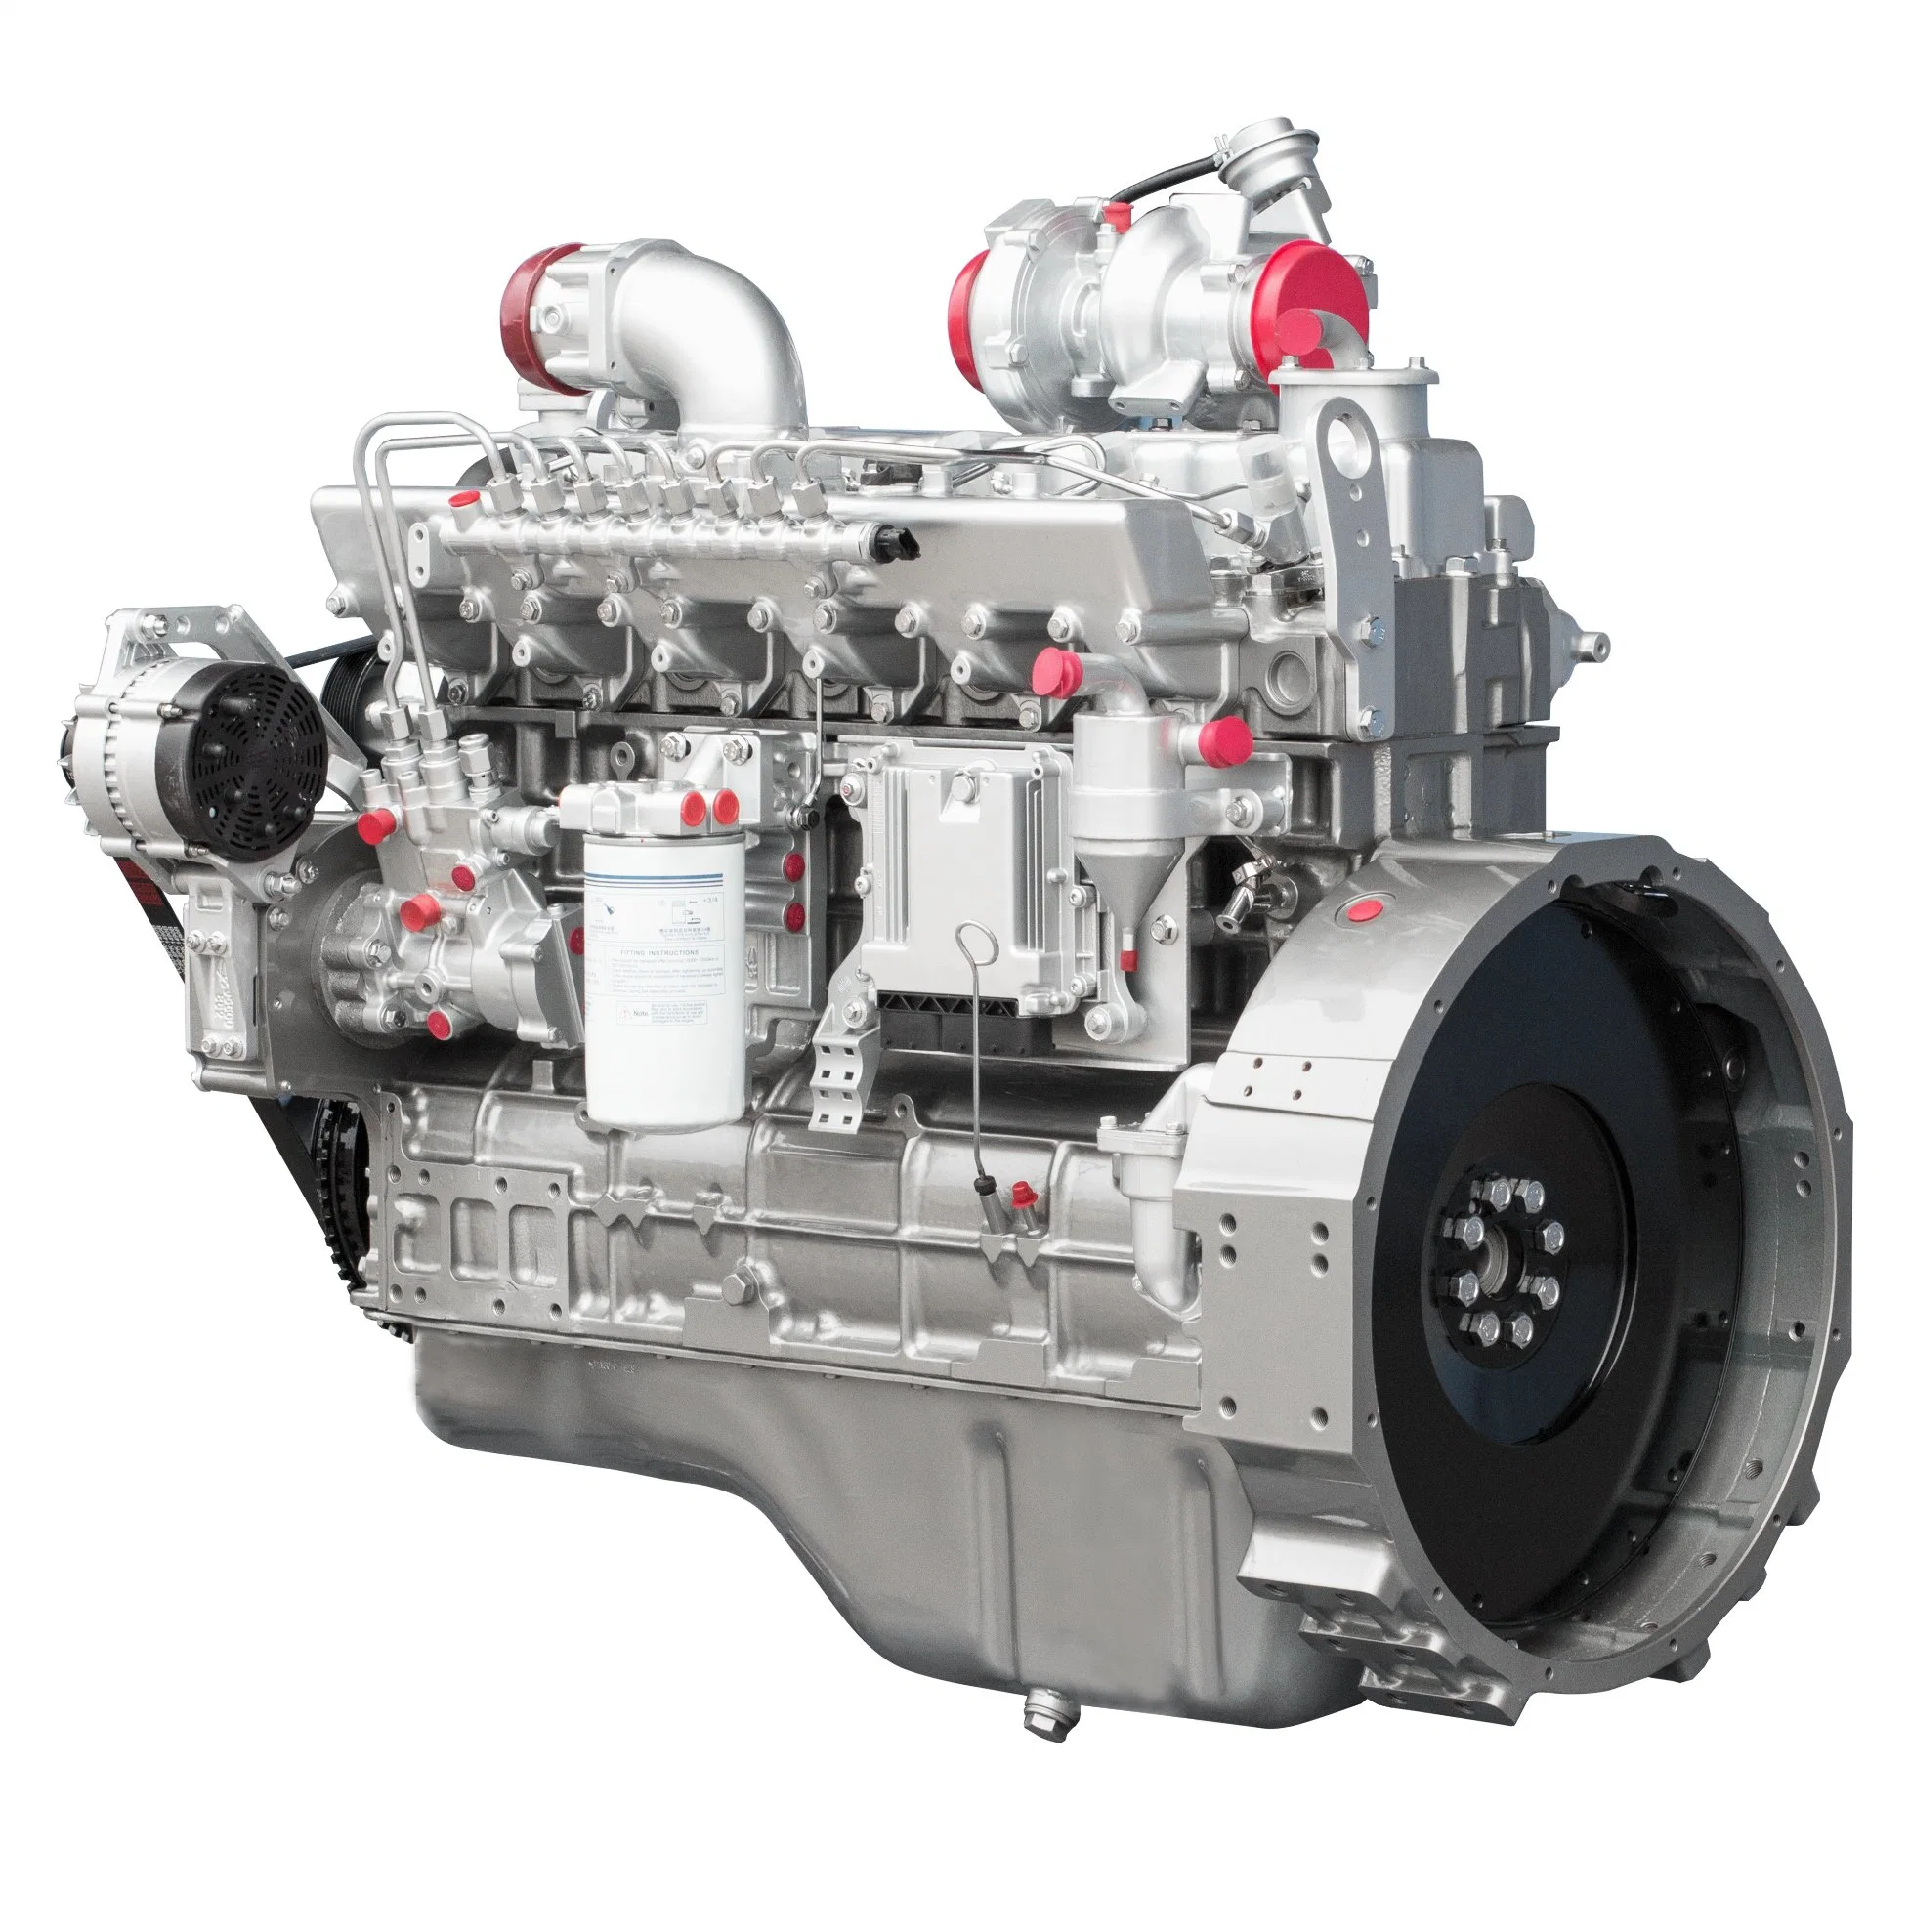 Supply Yuchai YC6JA Euro 5 Emission Classic Diesel Engine with Good Power Performance, Economy and Reliability